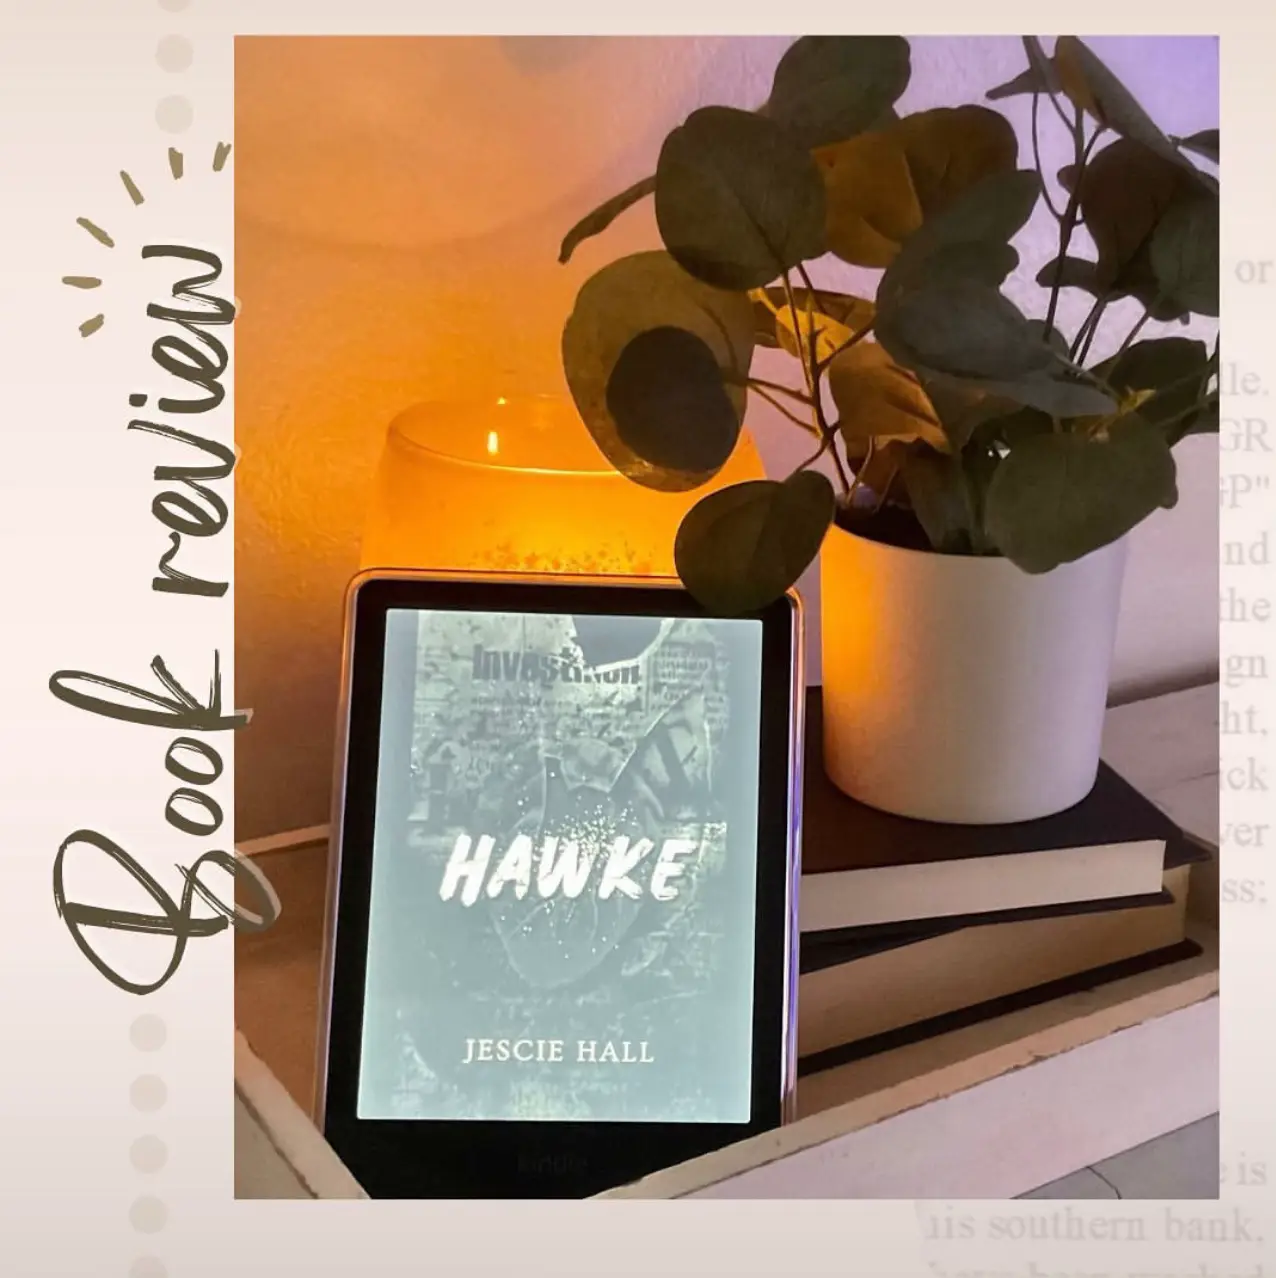 Jescie Hall Hawke Review - Lemon8 Search